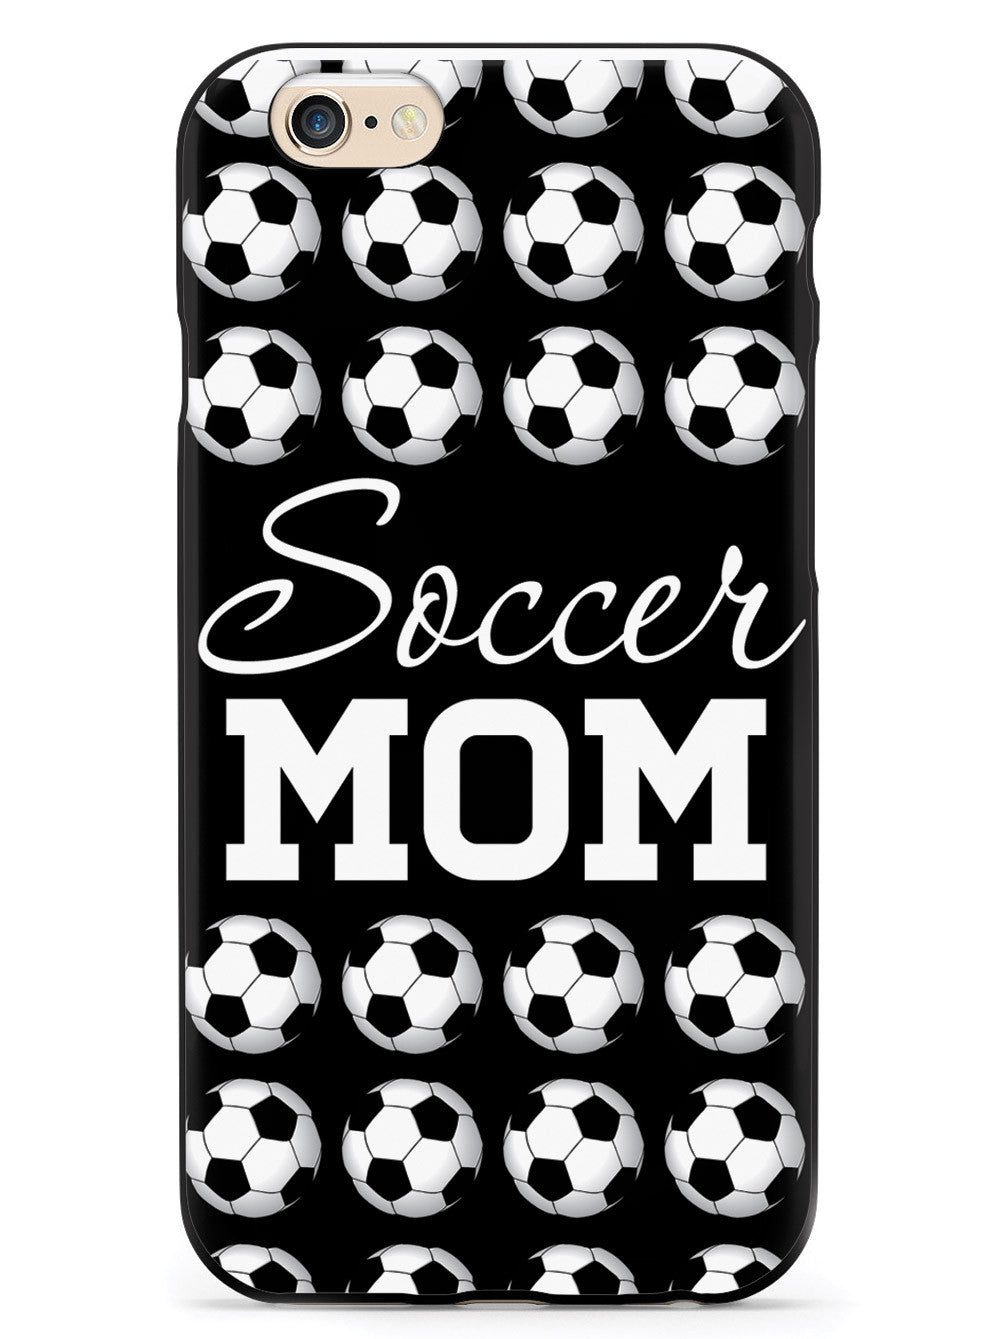 Soccer Mom Case